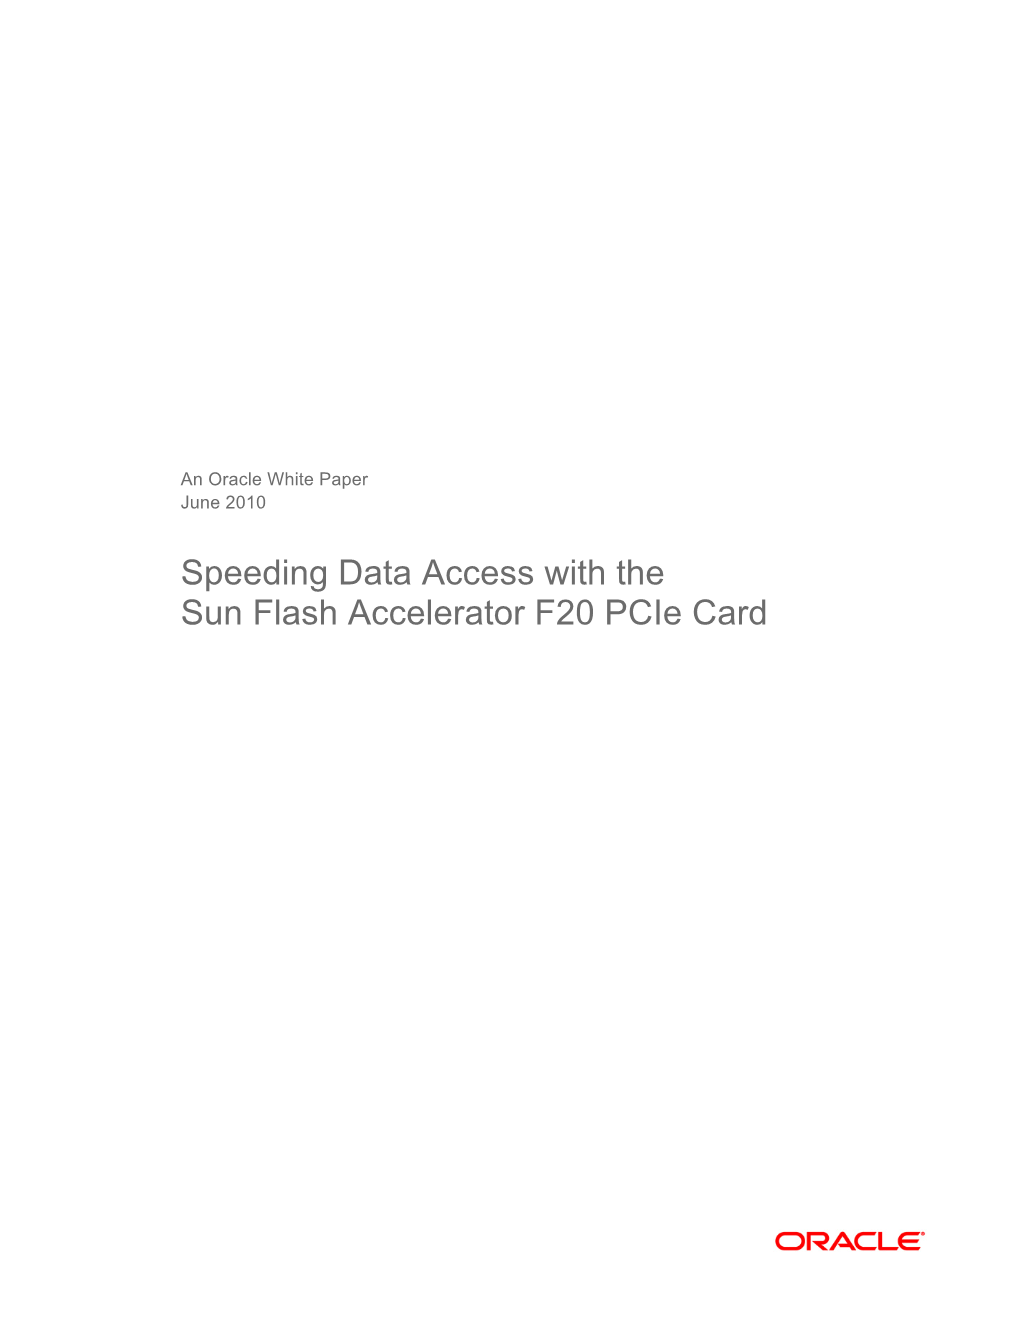 Speeding Data Access with the Sun Flash Accelerator F20 Pcie Card